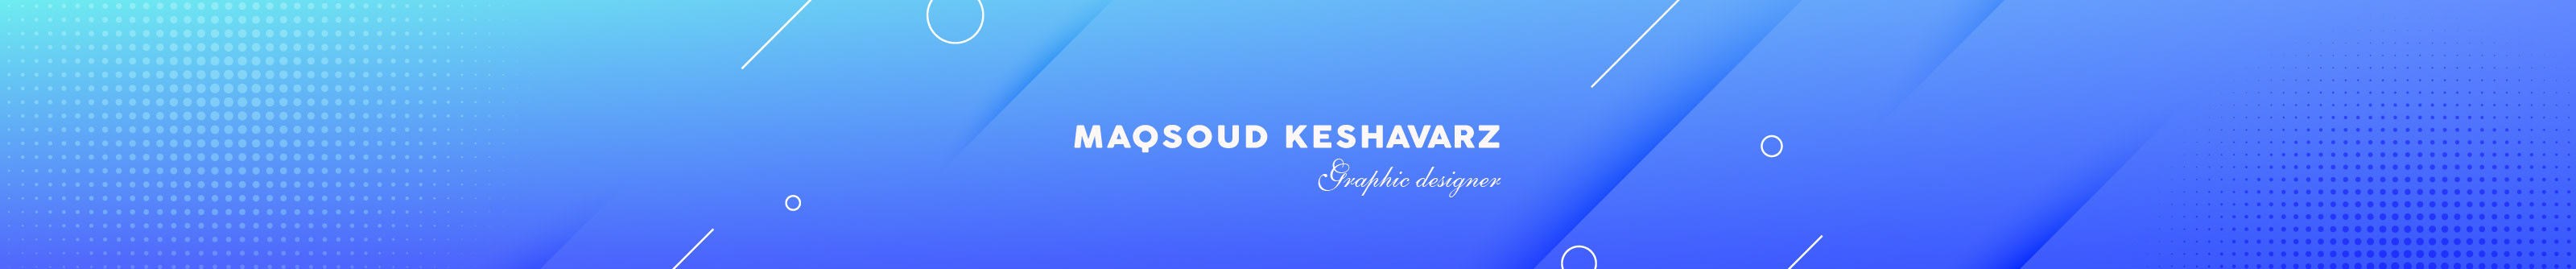 Banner del profilo di Maqsoud Keshavarz